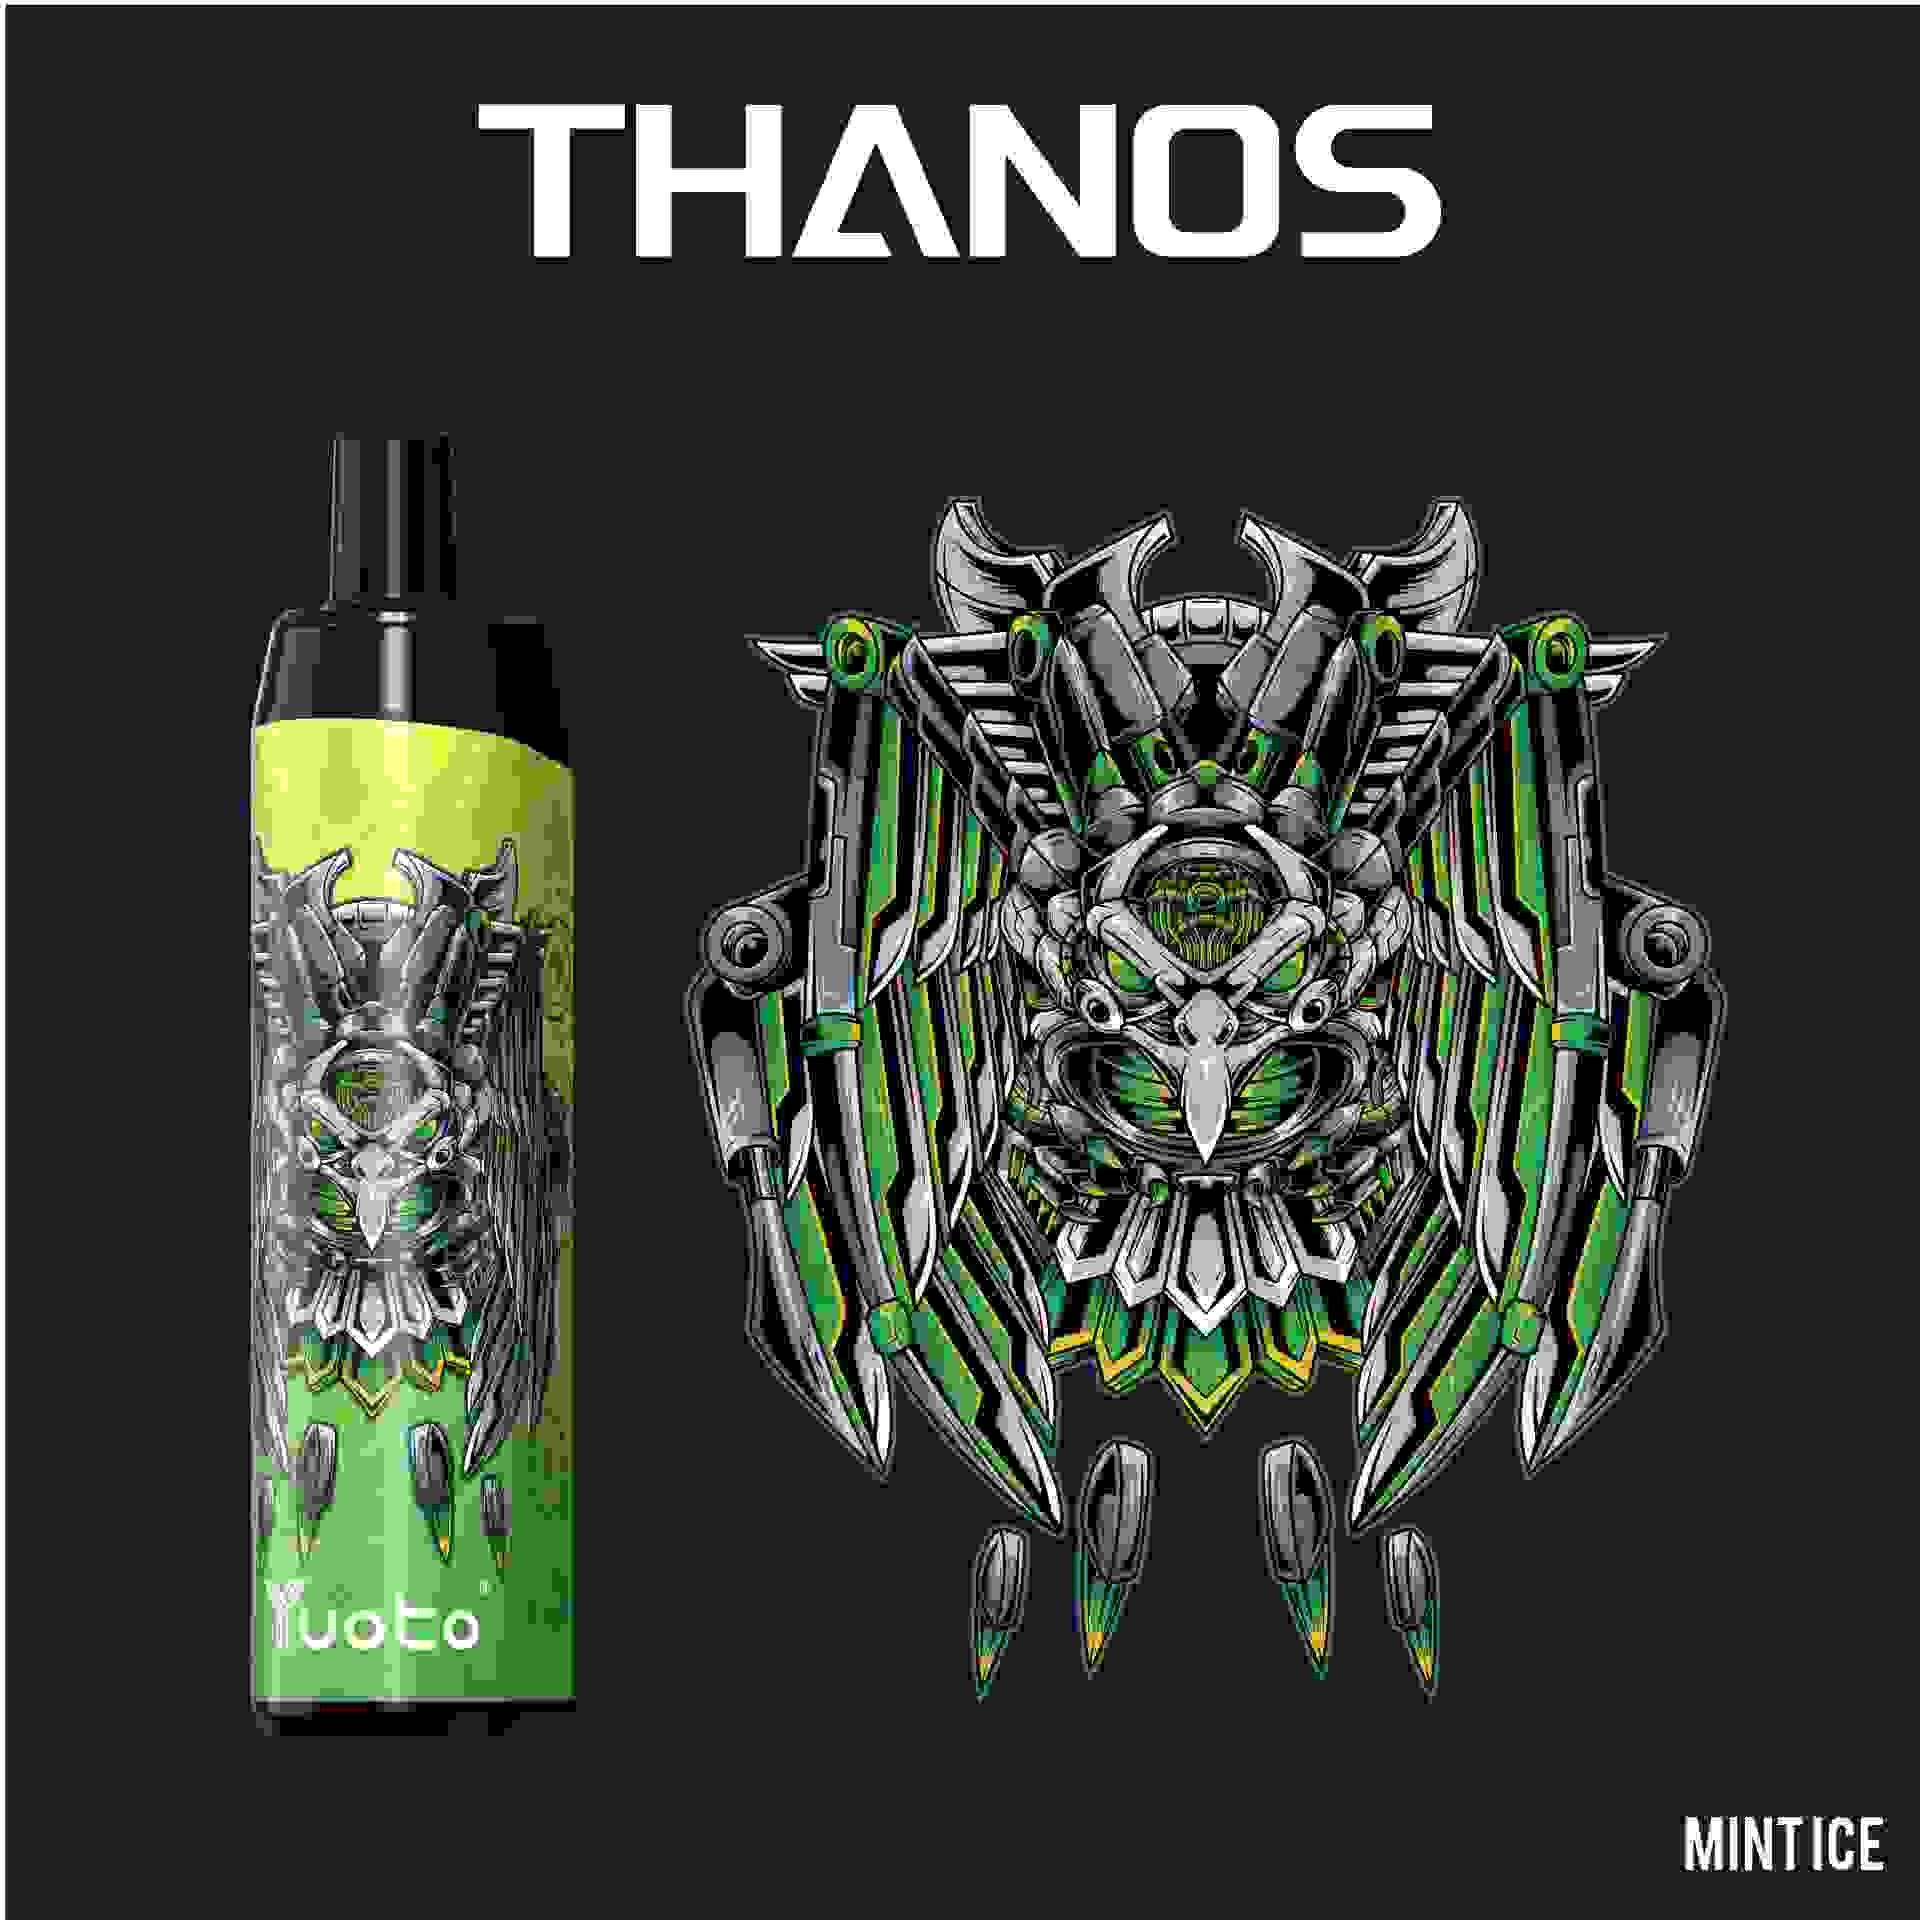 Mint ice – Yuoto Thanos – 5000